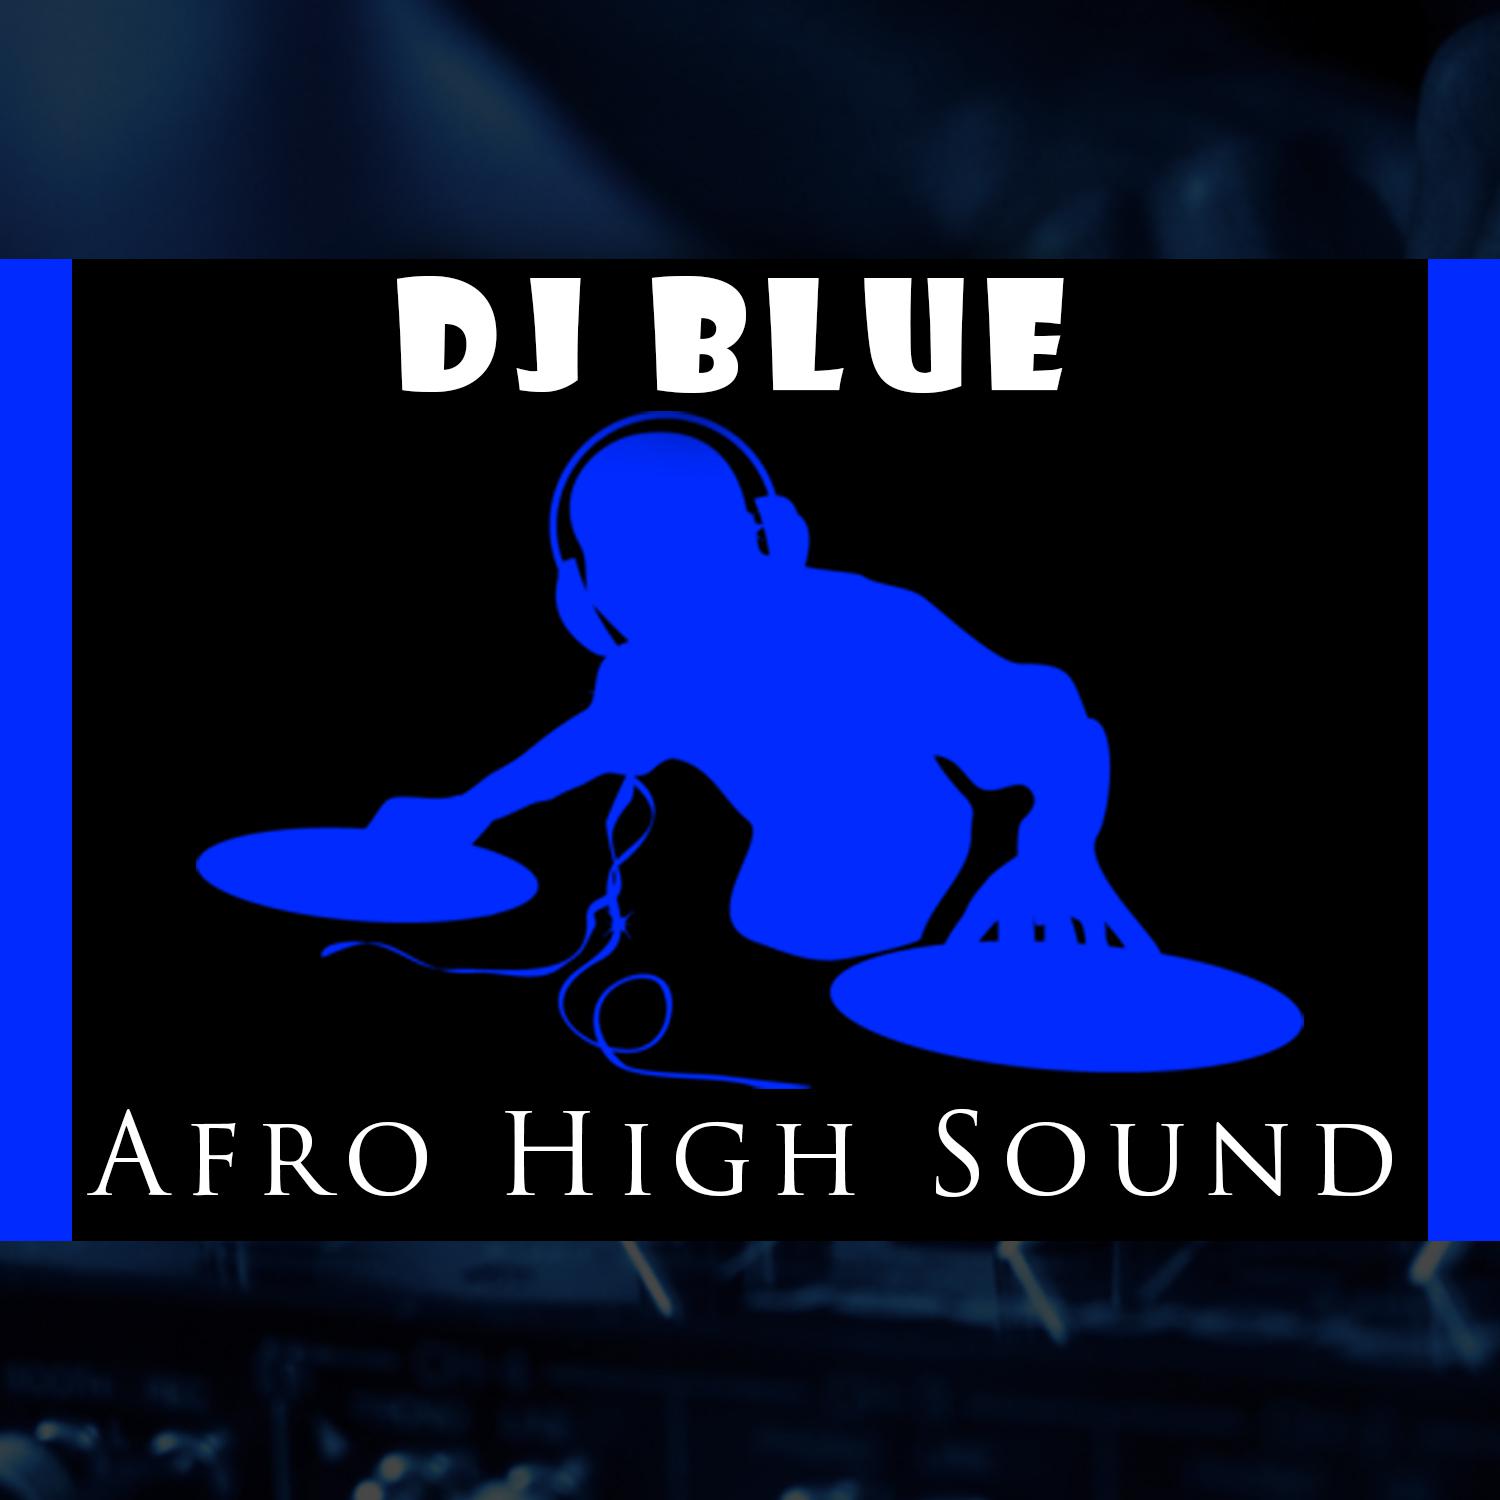 Look Like歌词 歌手Dj Blue-专辑Afro High Sound-单曲《Look Like》LRC歌词下载